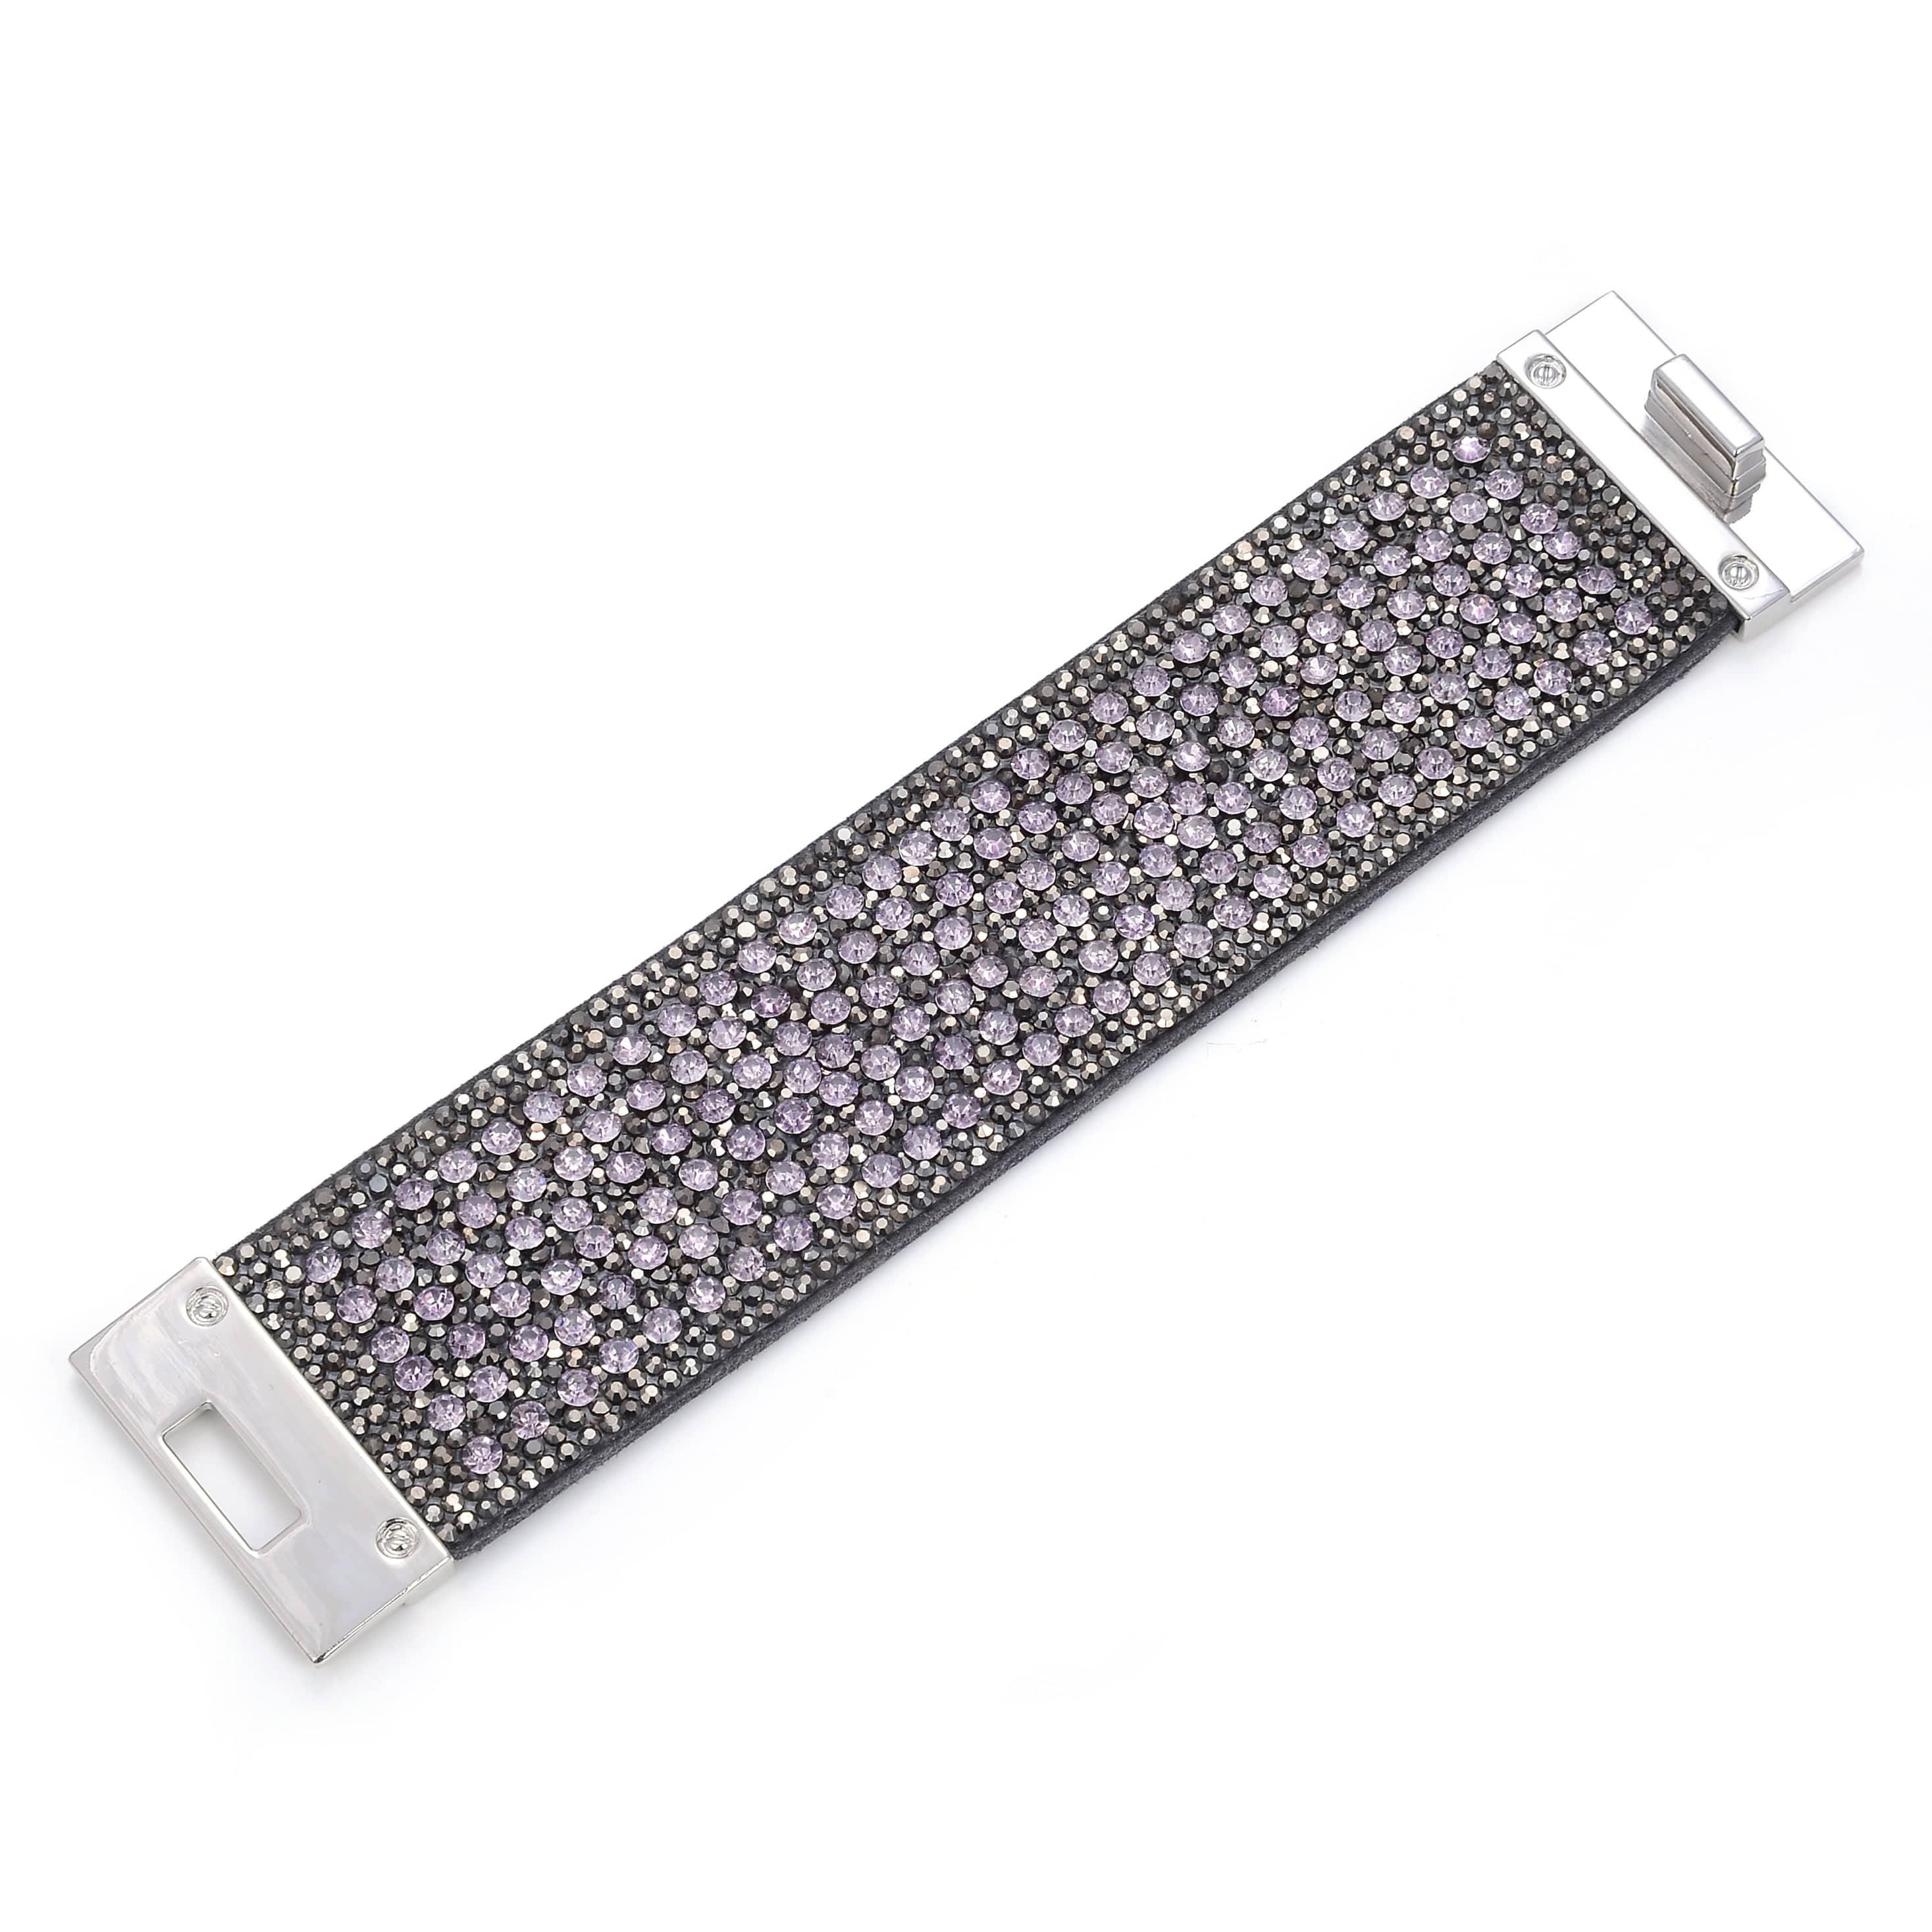 Kalifano Multiwrap Bracelets Swarovski Crystal Leather Band Bracelet Purple with Toggle Lock BMW-17-PE